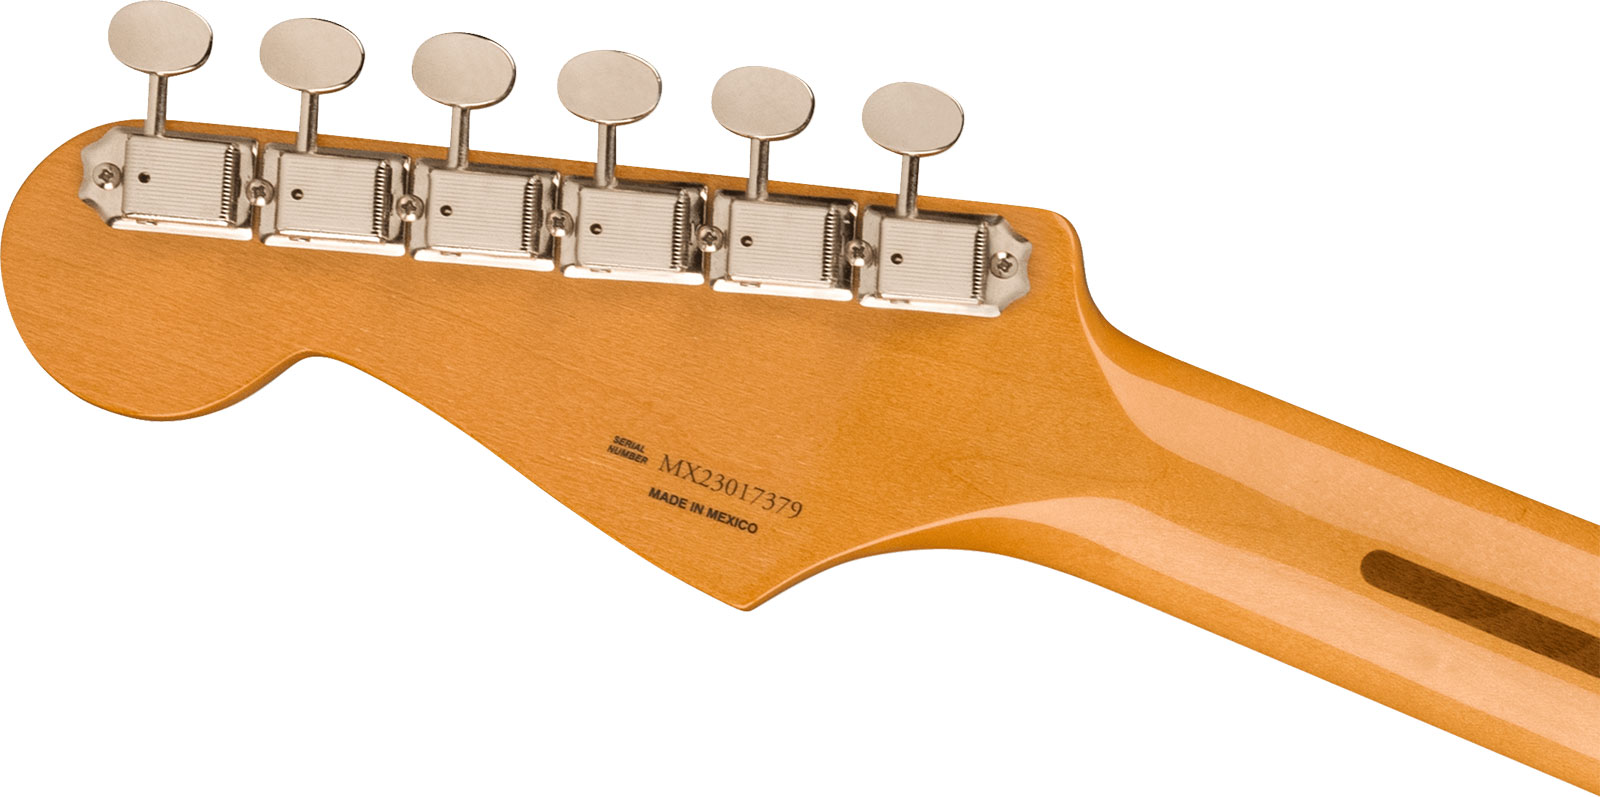 Fender Strat 50s Vintera 2 Mex 3s Trem Mn - Ocean Turquoise - E-Gitarre in Str-Form - Variation 3